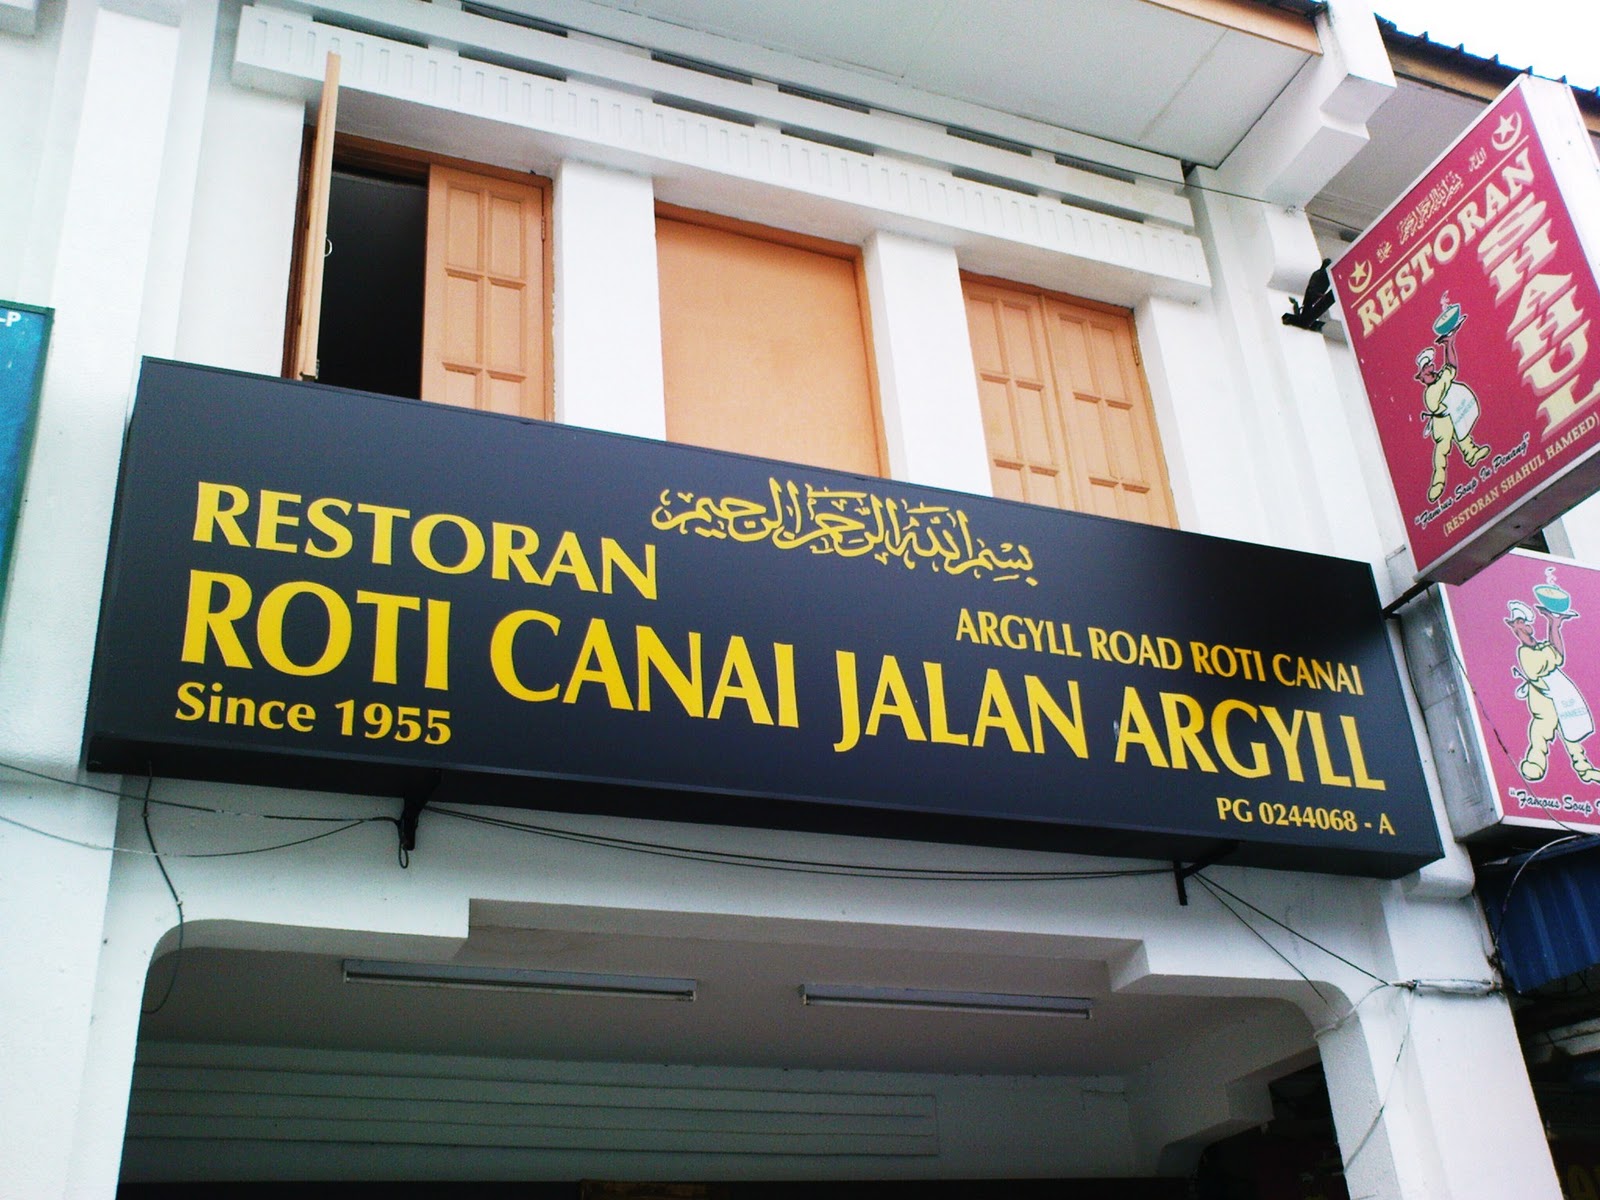 EAT OUT with SAM: Restoran Roti Canai Jalan Argyll @ Argyll Road